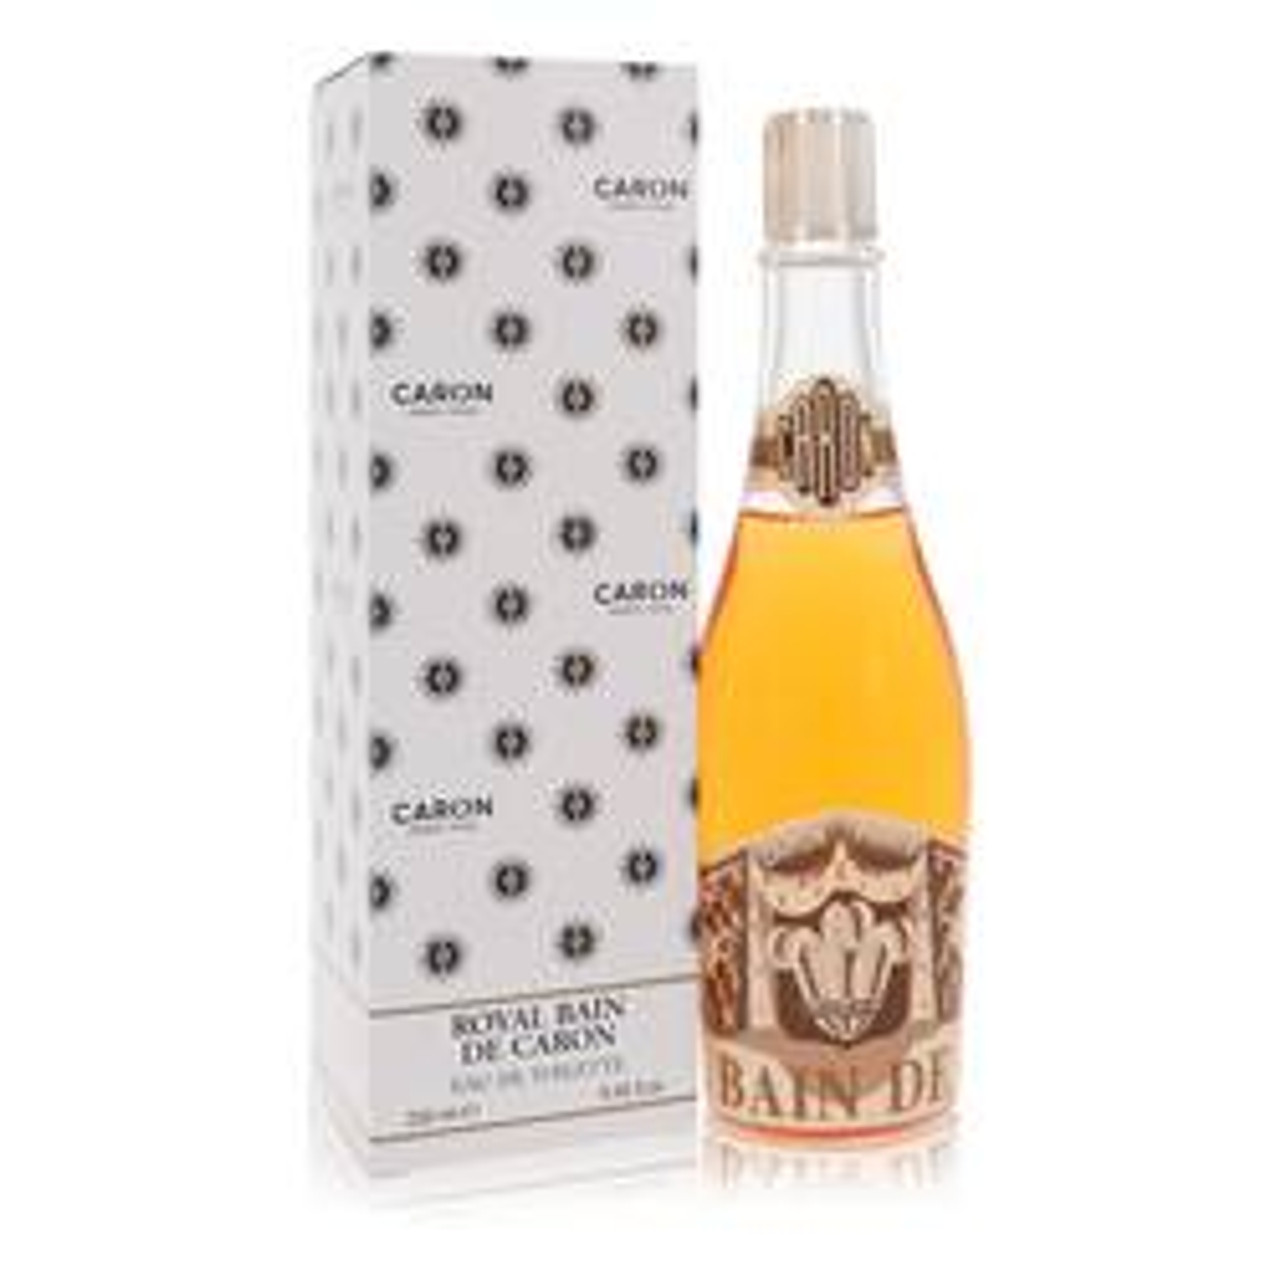 Royal Bain De Caron Champagne Perfume By Caron Eau De Toilette (Unisex) 8 oz for Women - [From 152.00 - Choose pk Qty ] - *Ships from Miami